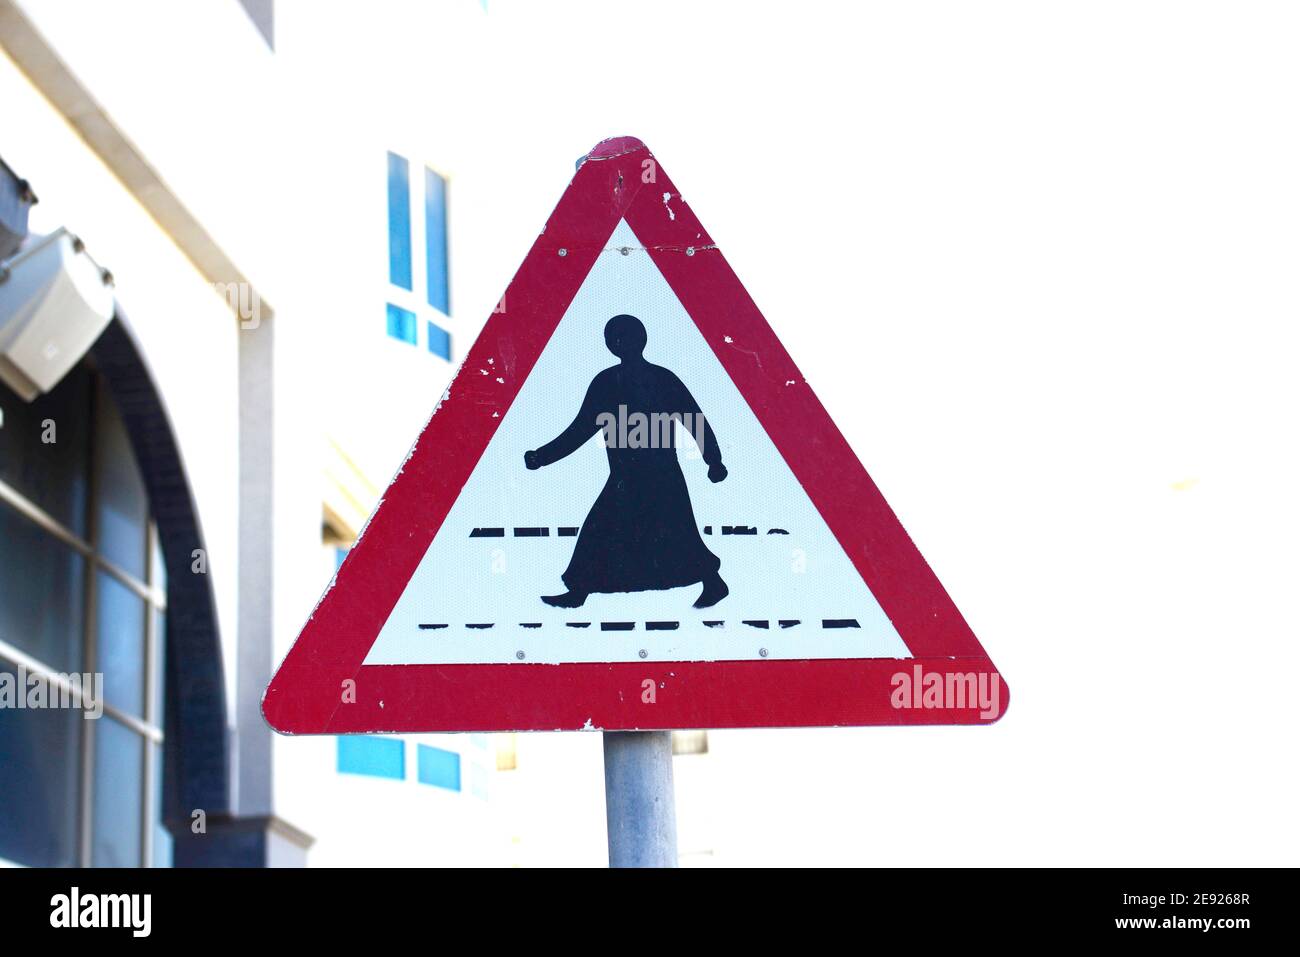 Qatari ' slow down' for pedestrian road sign. Stock Photo